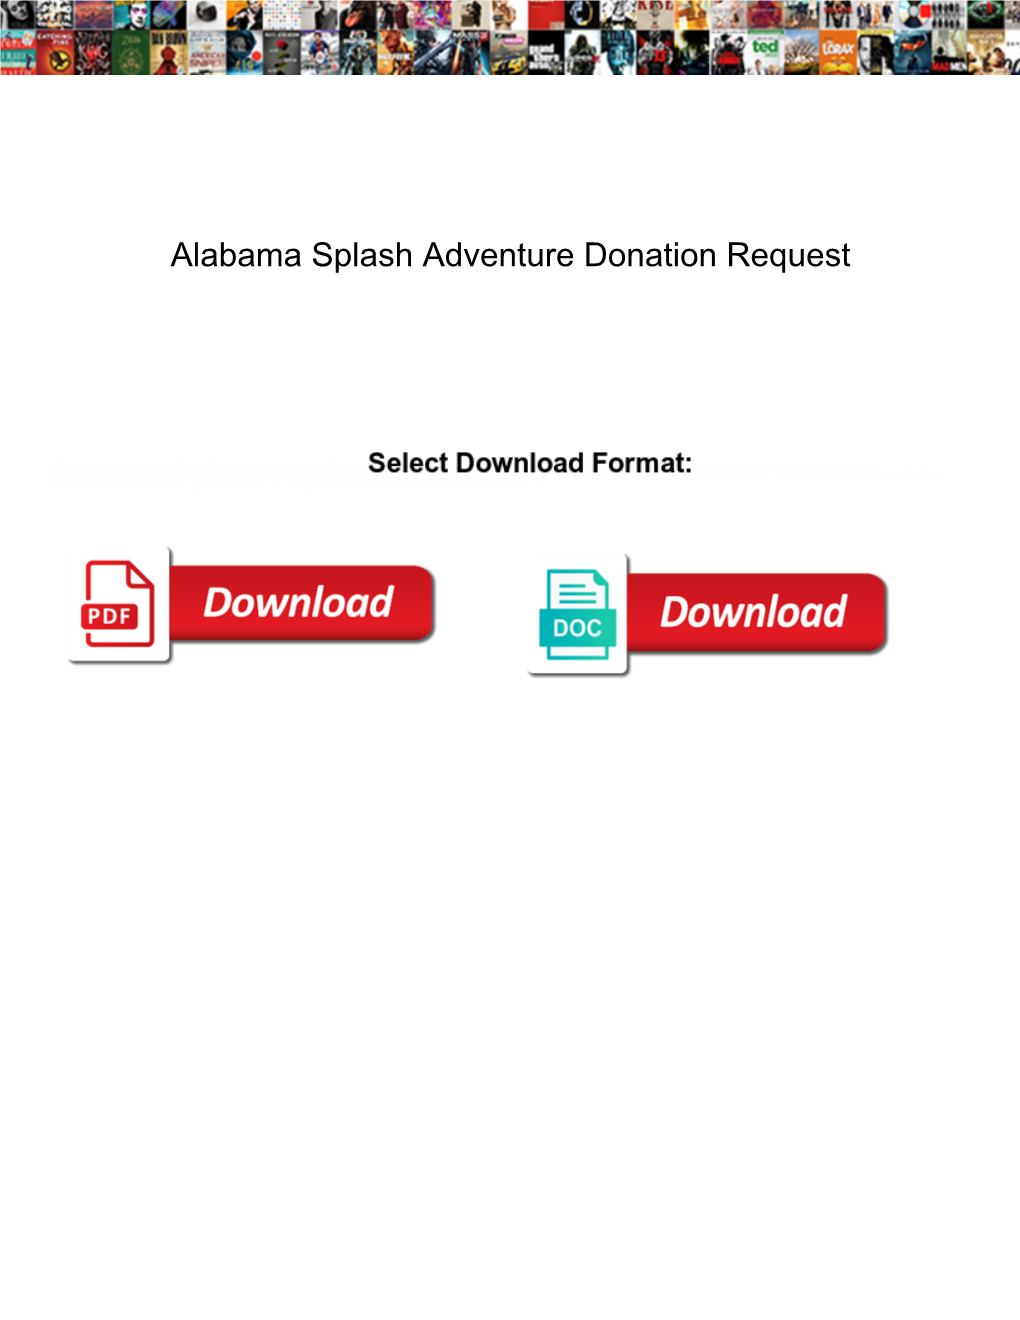 Alabama Splash Adventure Donation Request Riddick